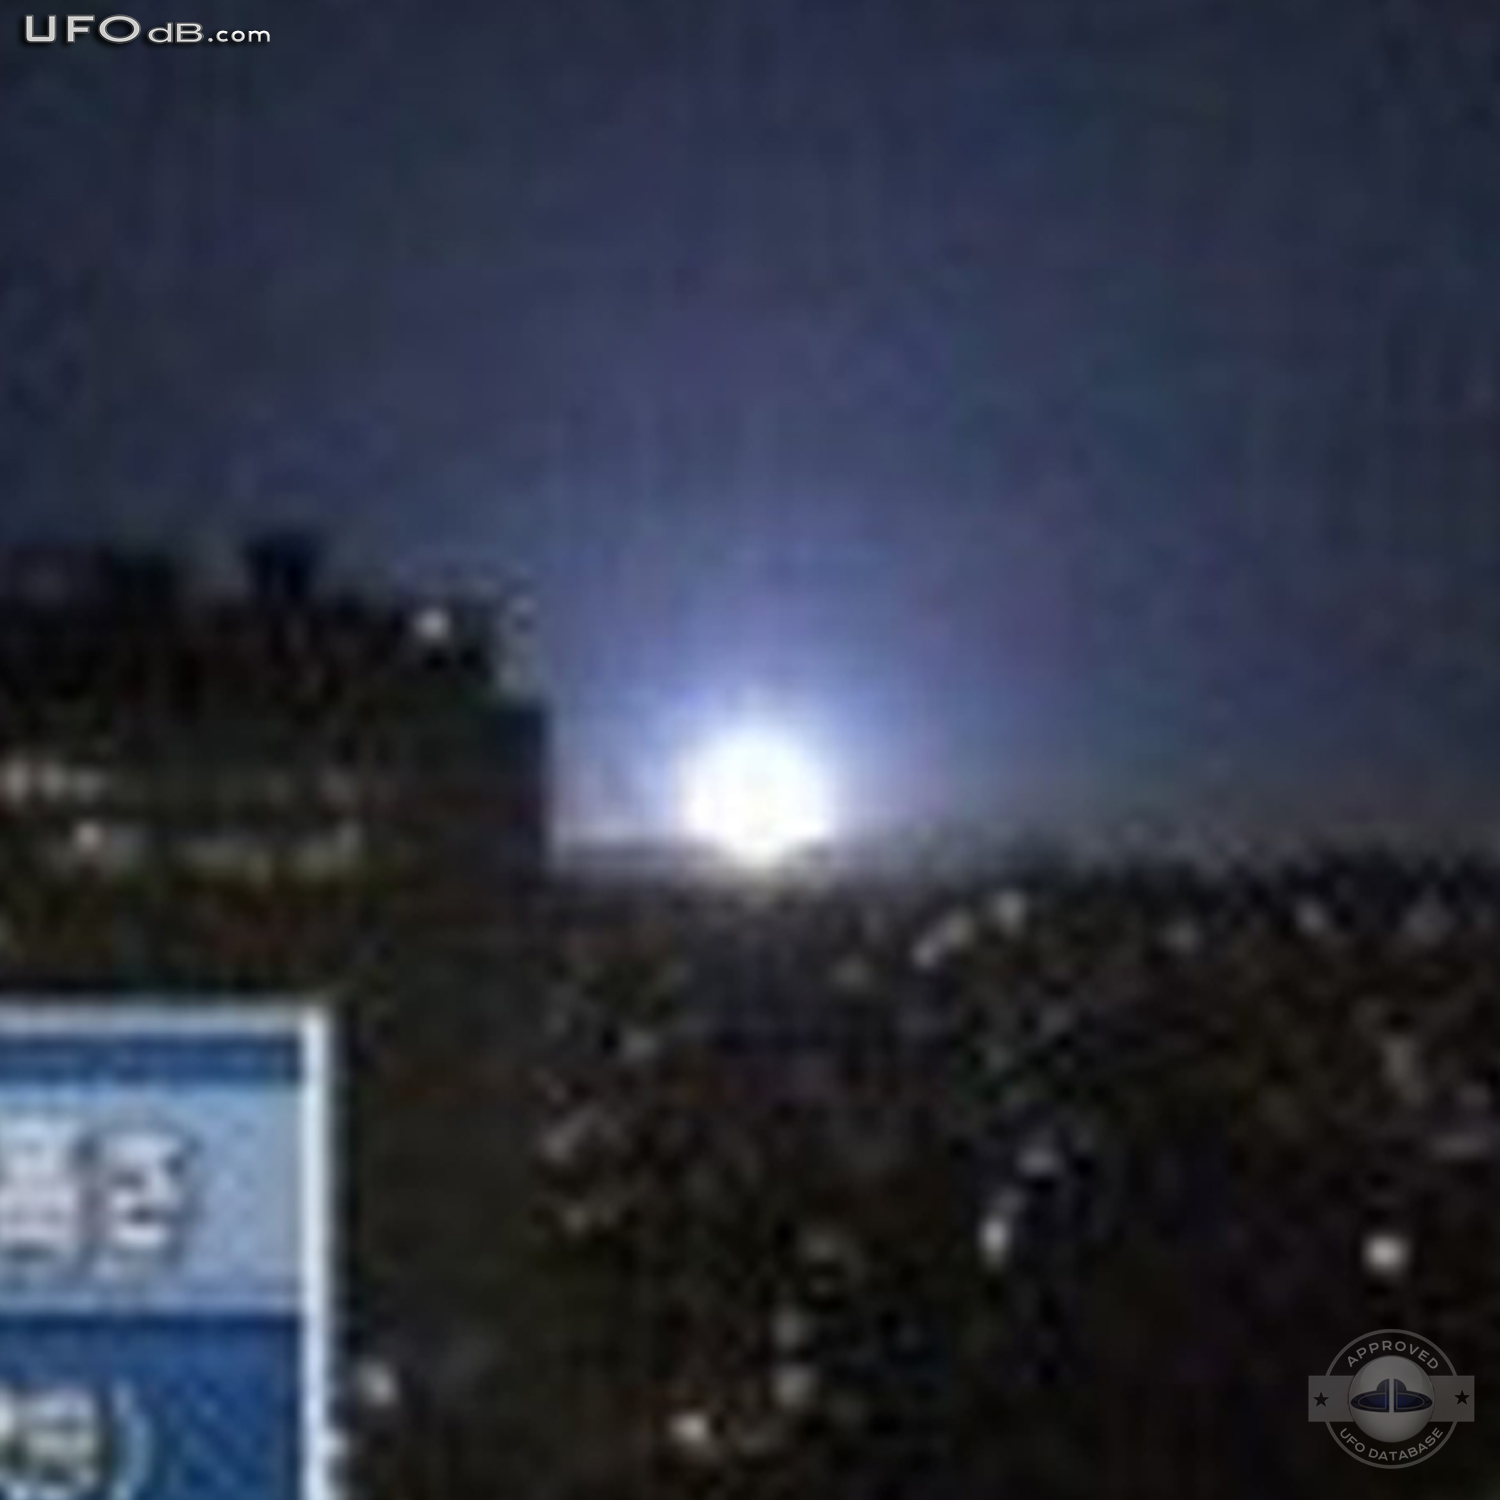 NHK TV News show earthquake strange UFO light | Japan | April 7 2011 UFO Picture #293-4